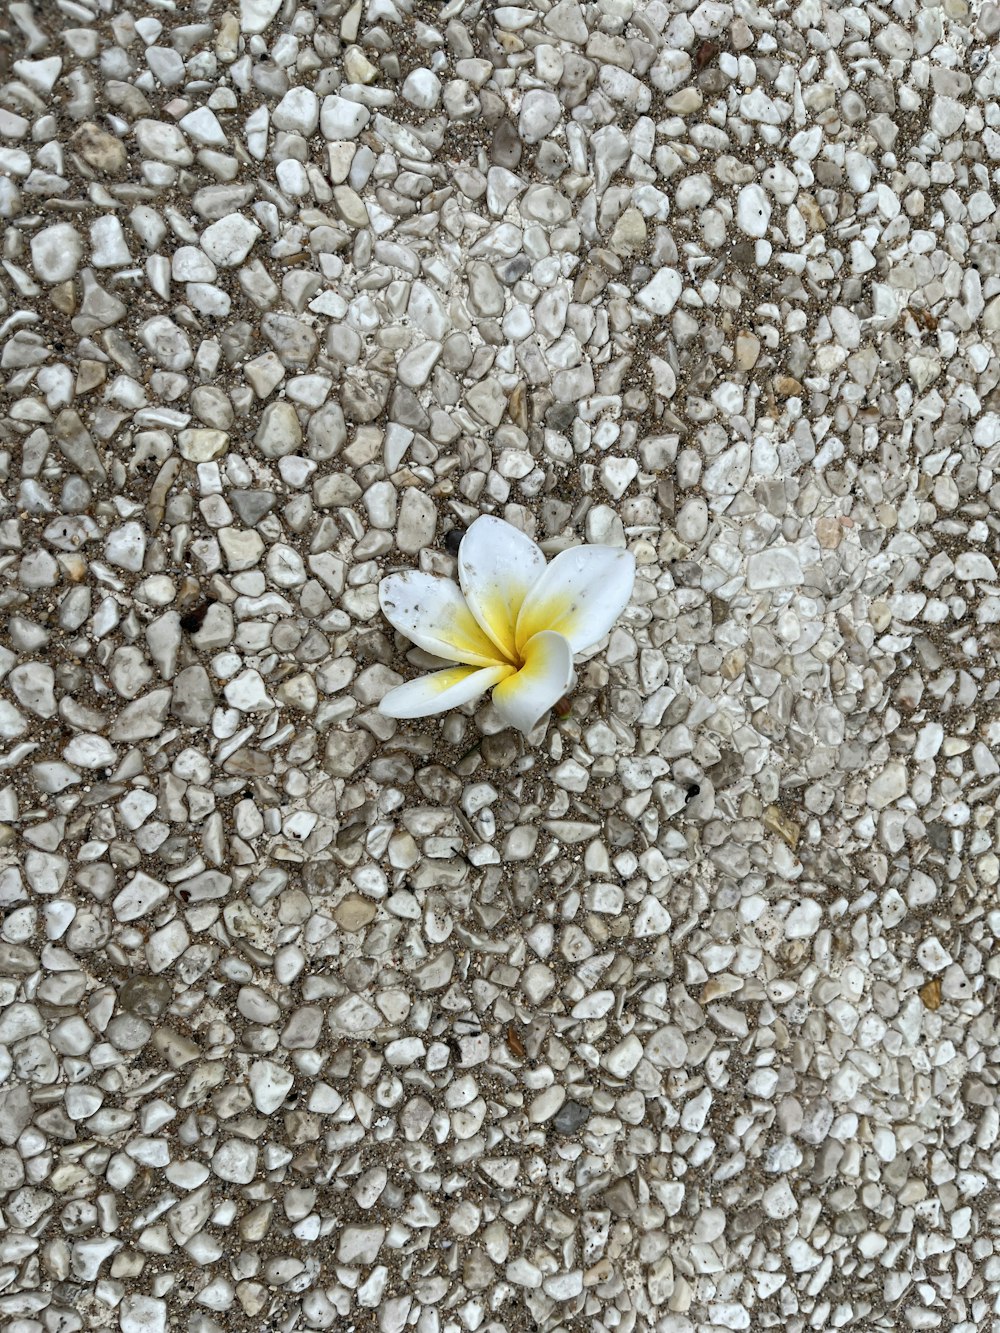 a flower on a rocky surface